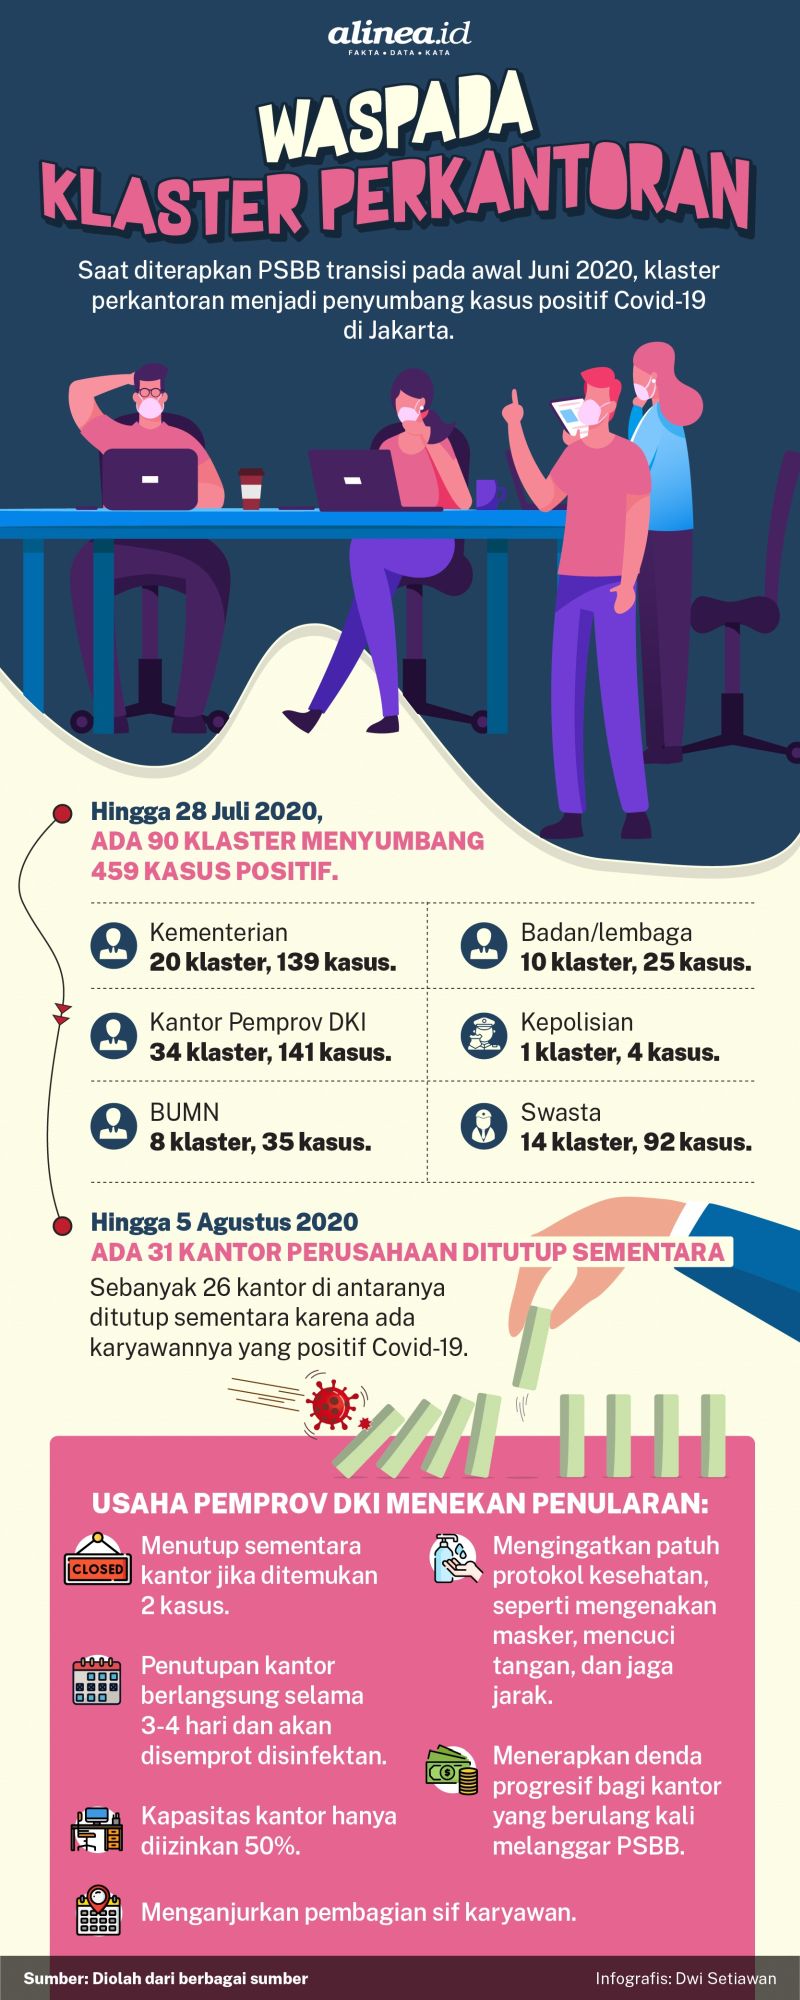 Infografik klaster perkantoran. Alinea.id/Dwi Setiawan.